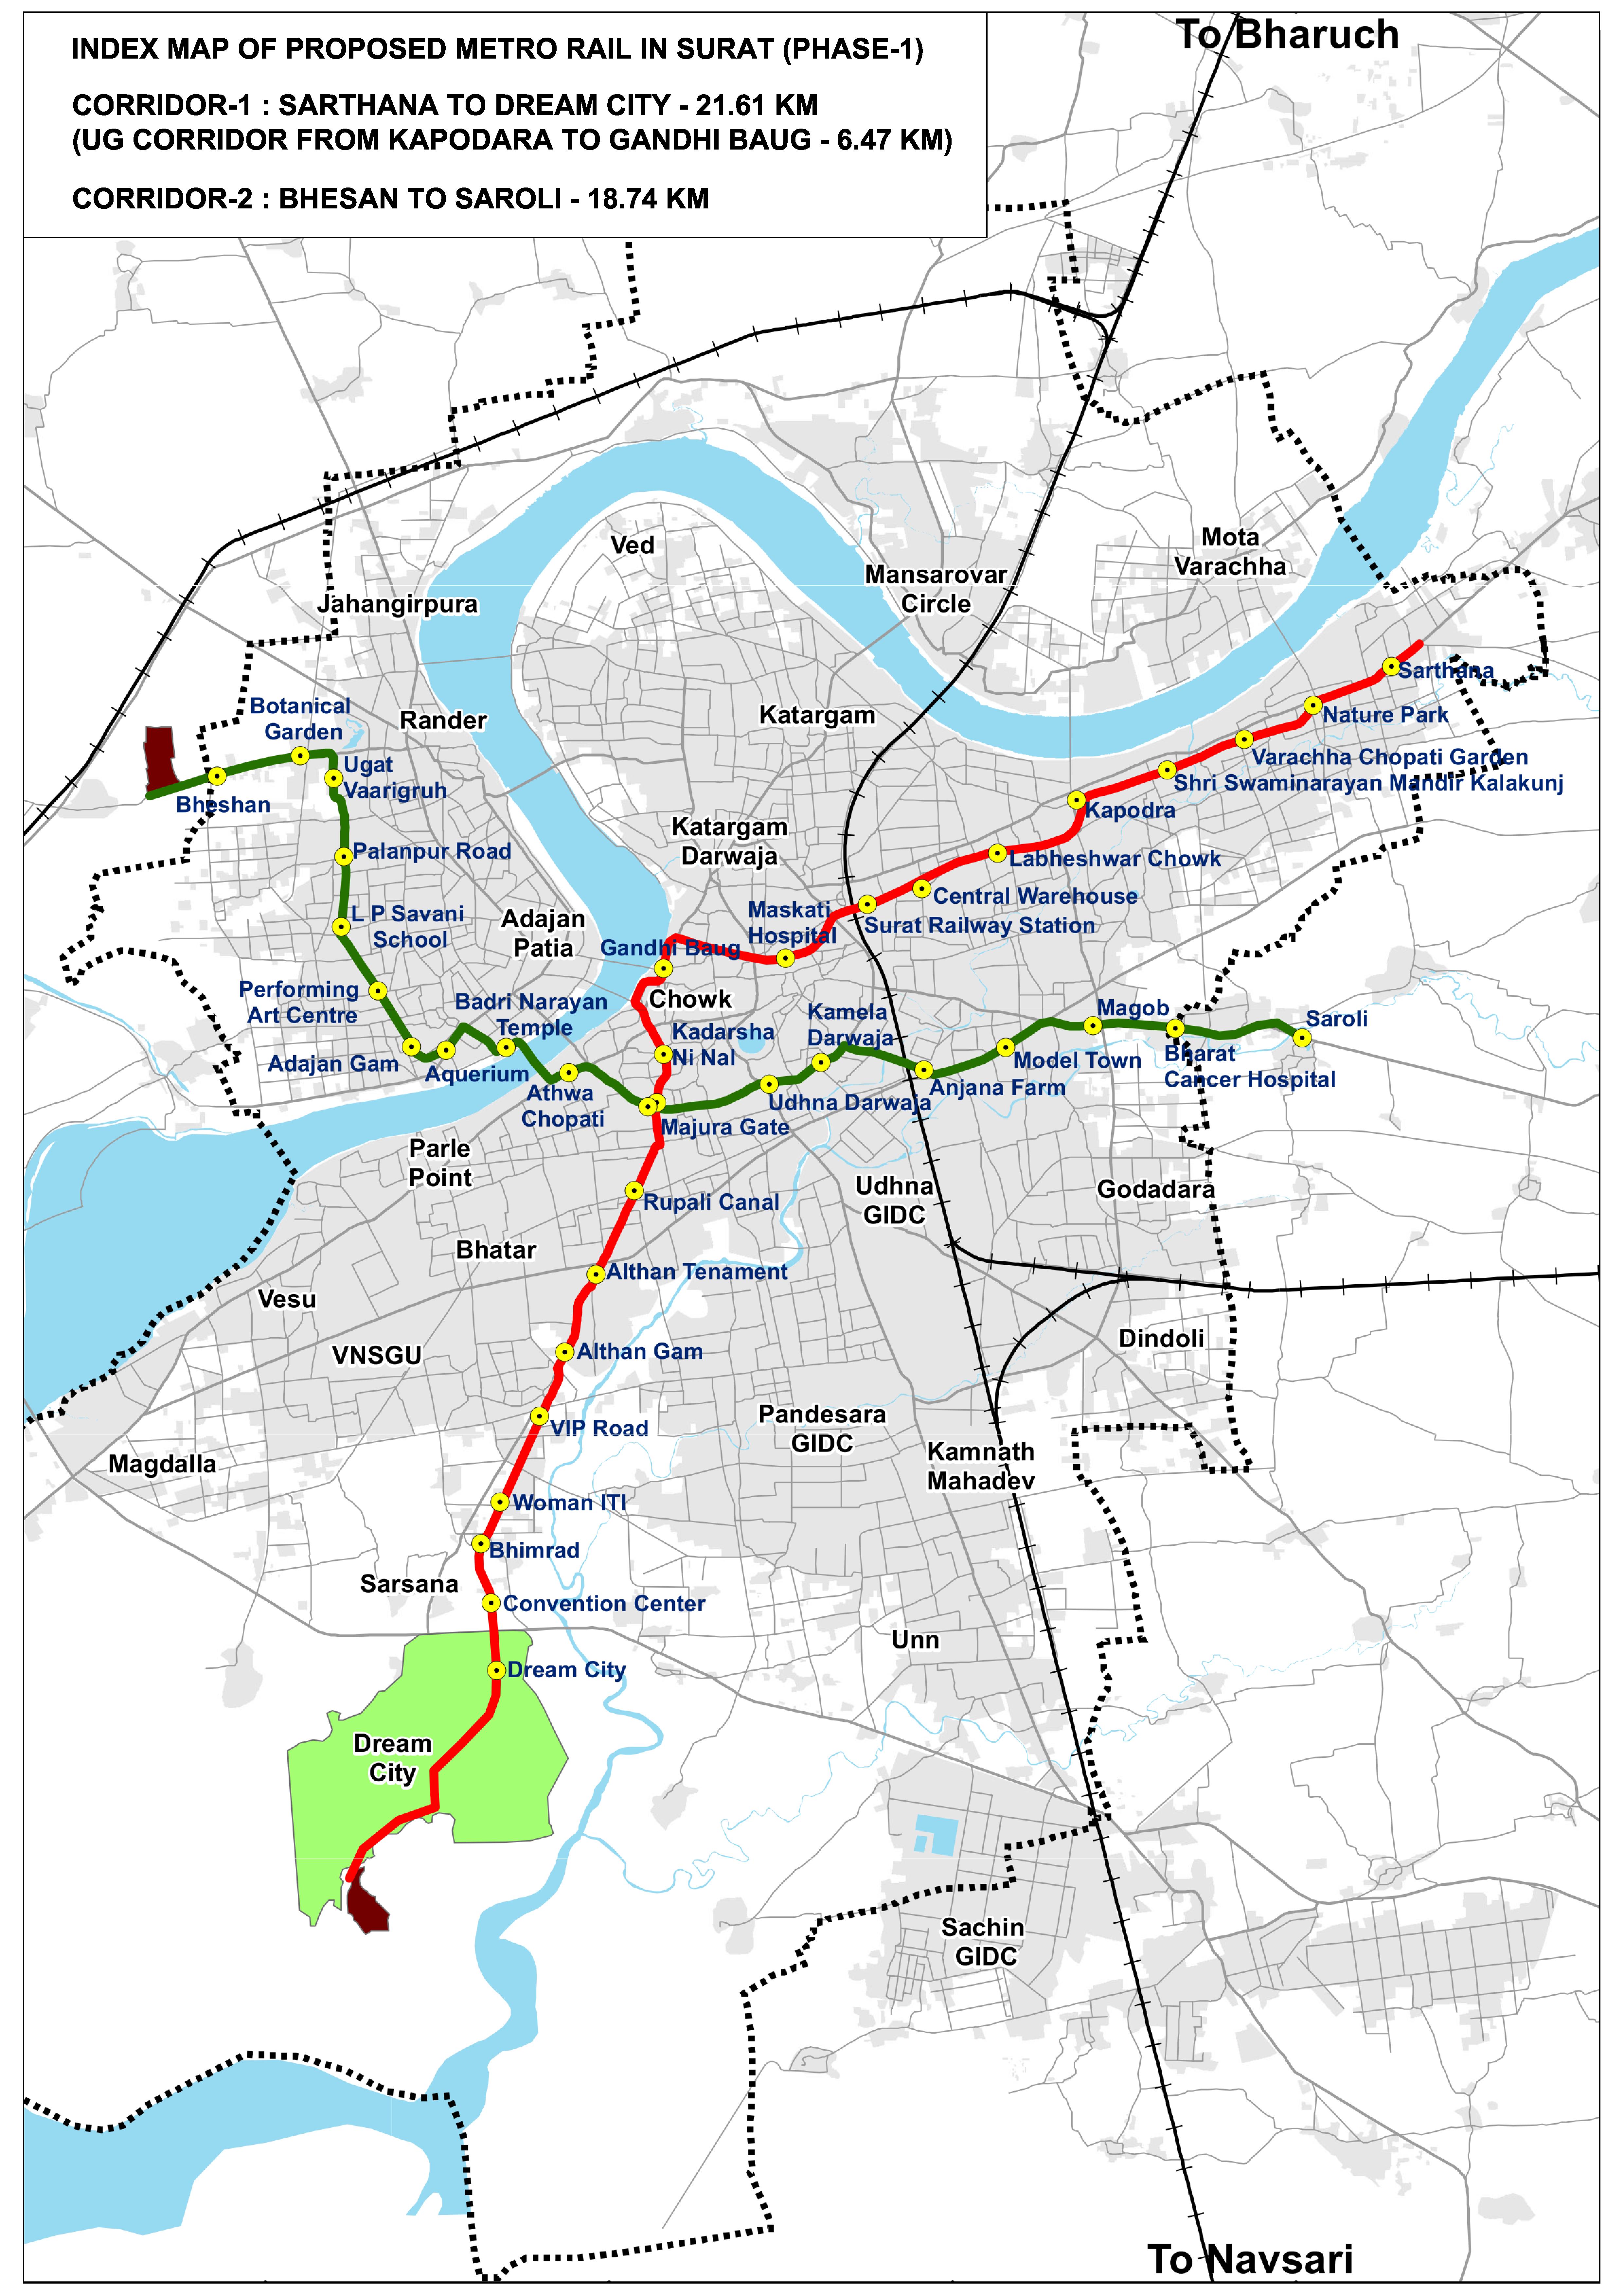 Ahmedabad Dholera Expressway - Route, Map and Benefits